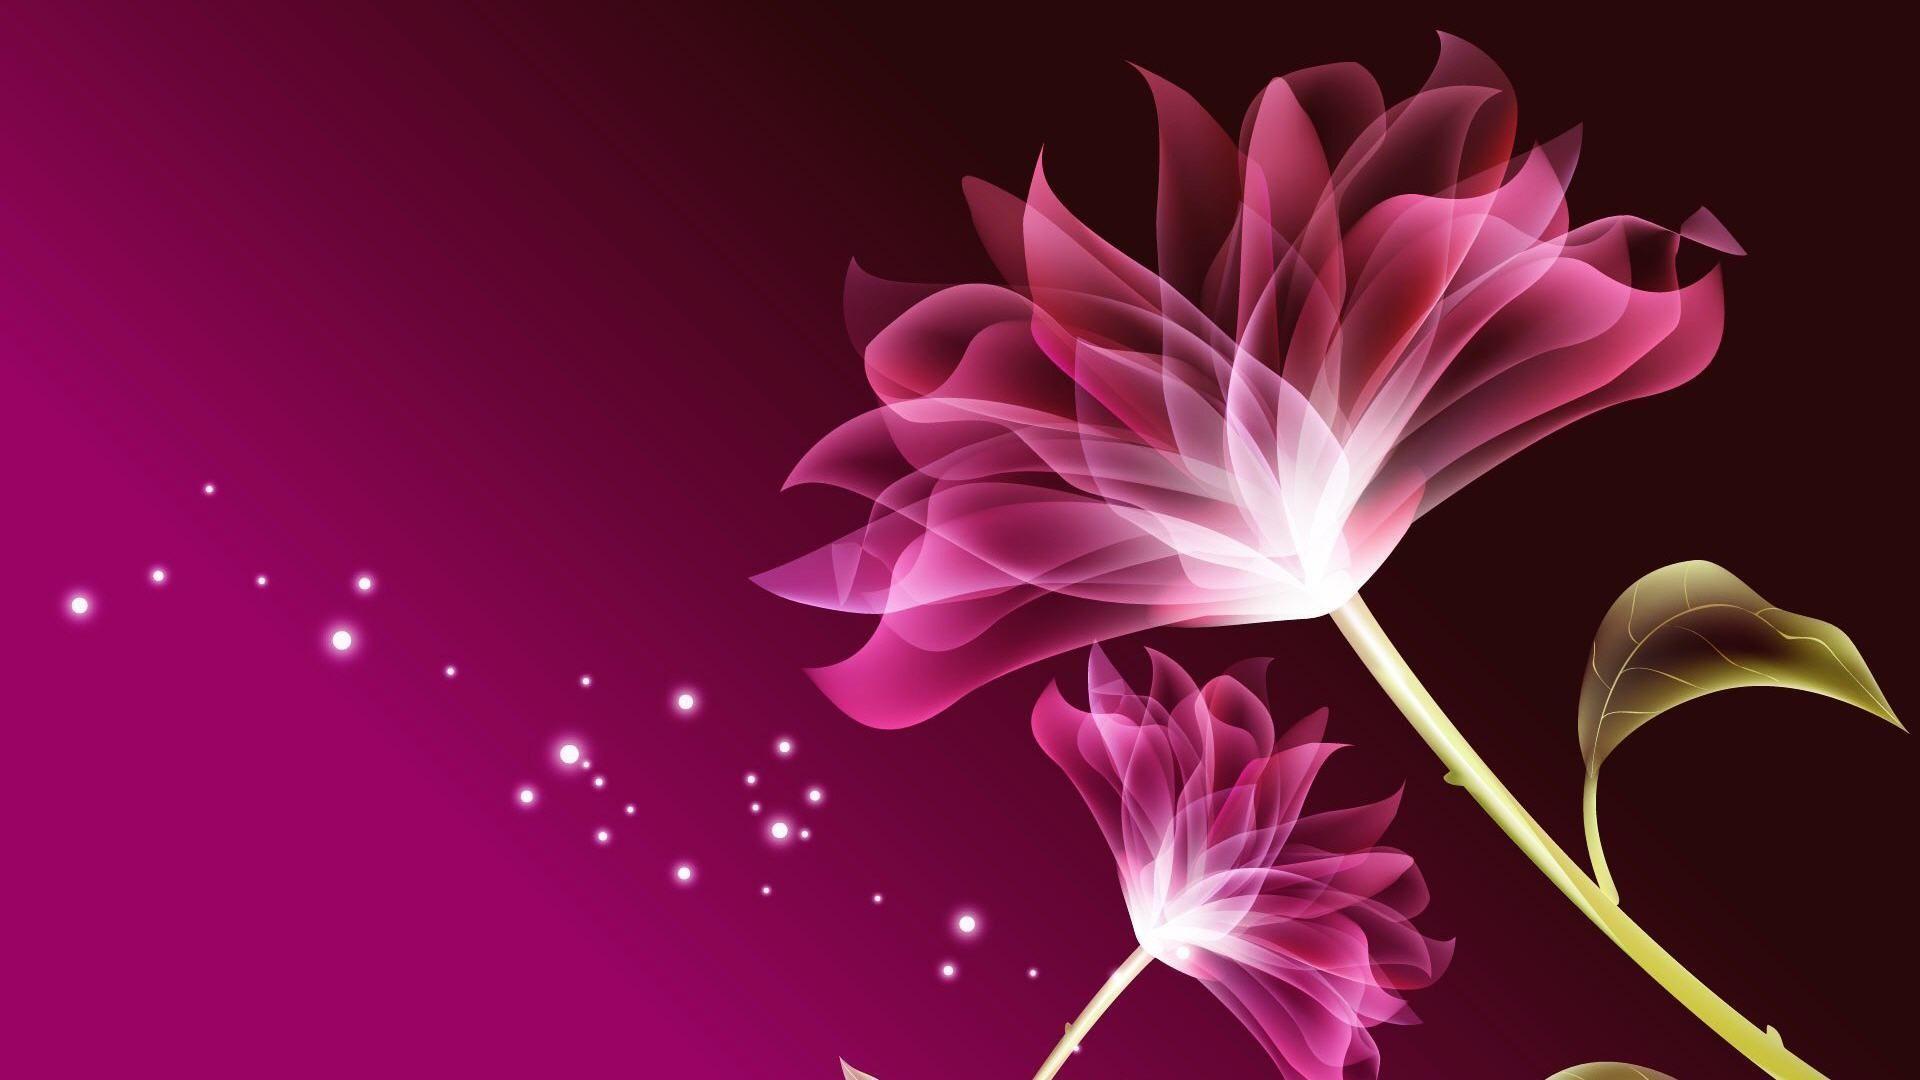 Pink Beautiful Flower Wallpaper. Flower Image Wallpaper, Purple Flowers Wallpaper, Flower Background Wallpaper